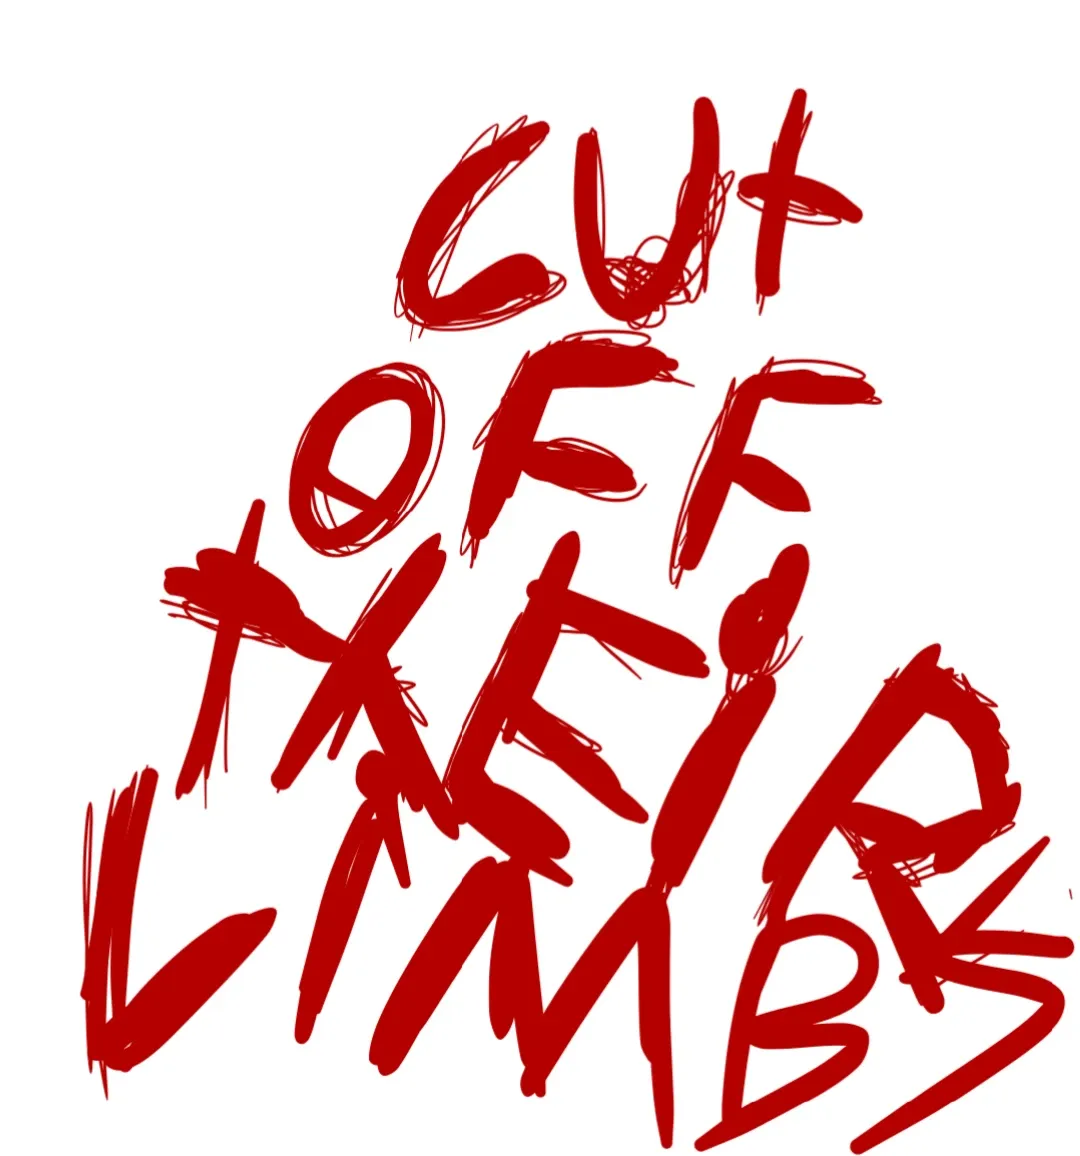 Cut Off Their Limbs